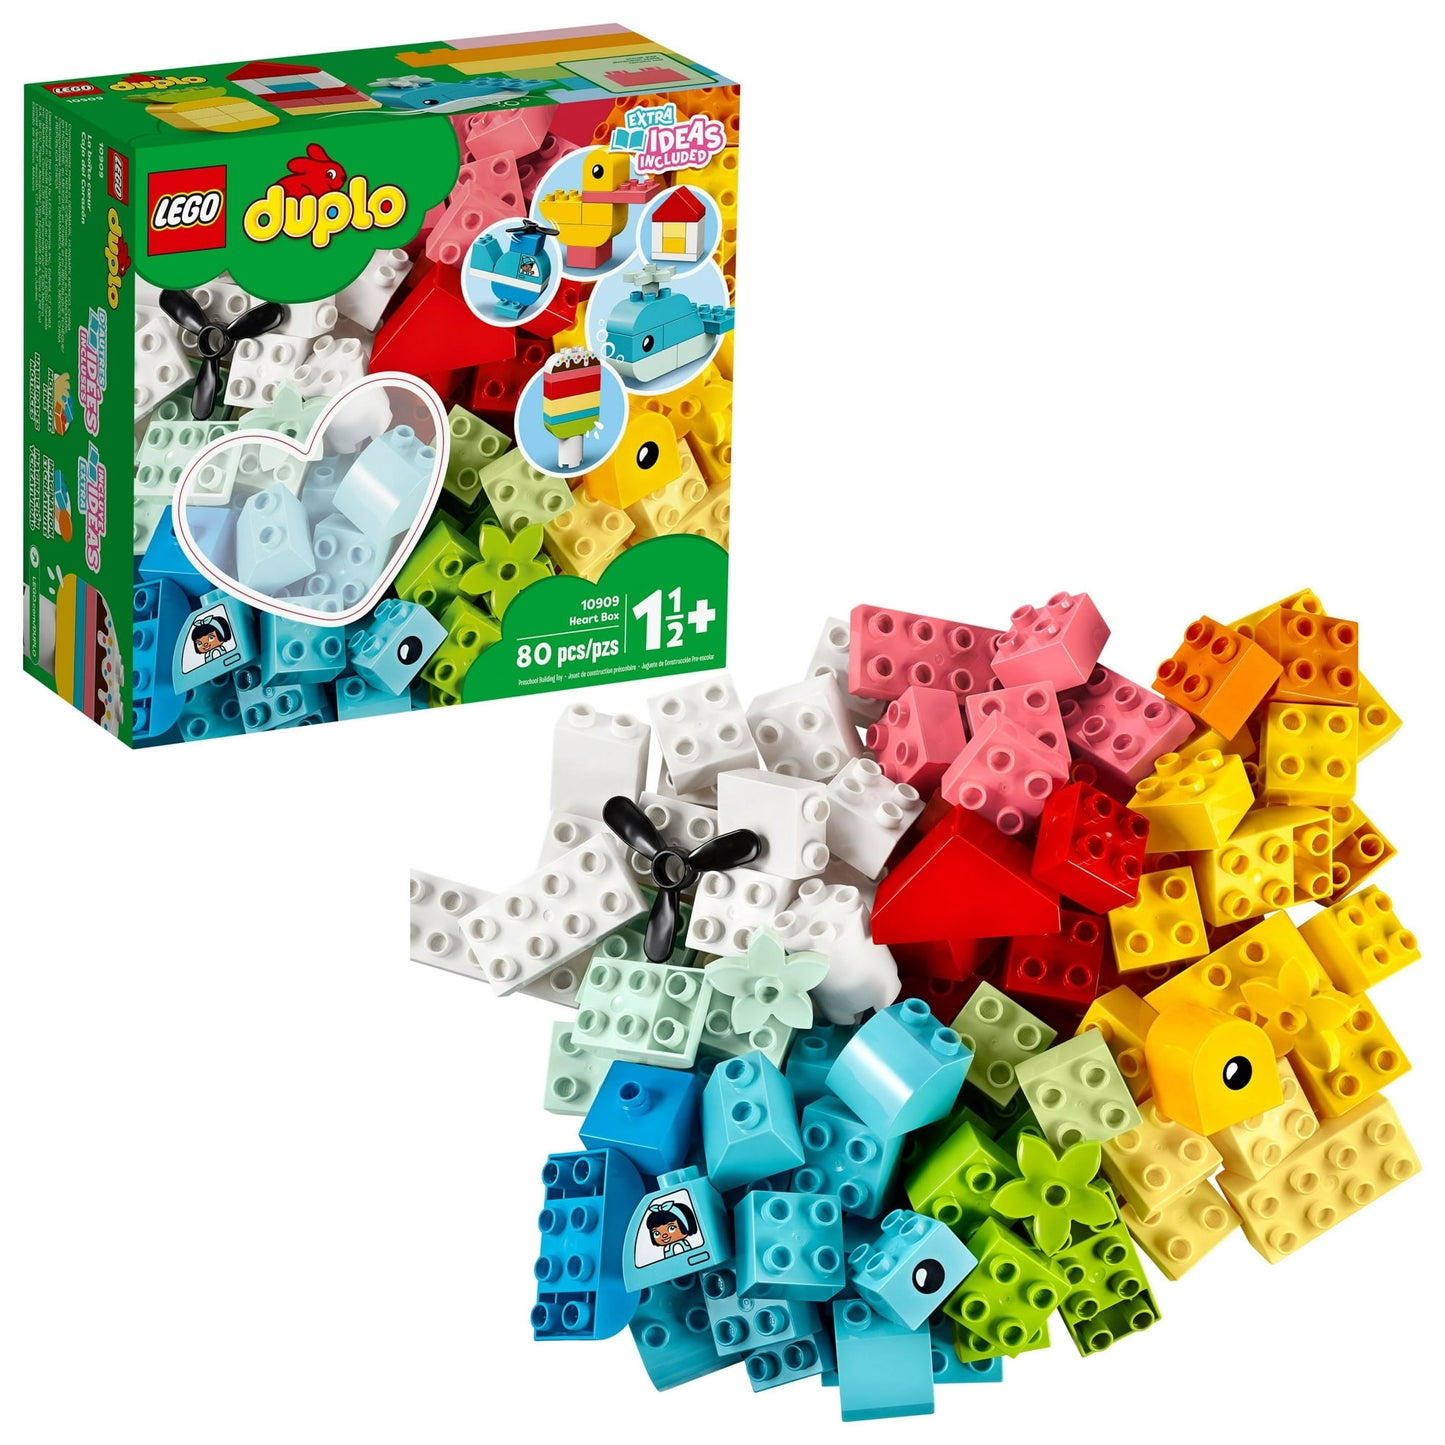 LEGO DUPLO Classic Heart Box 10909